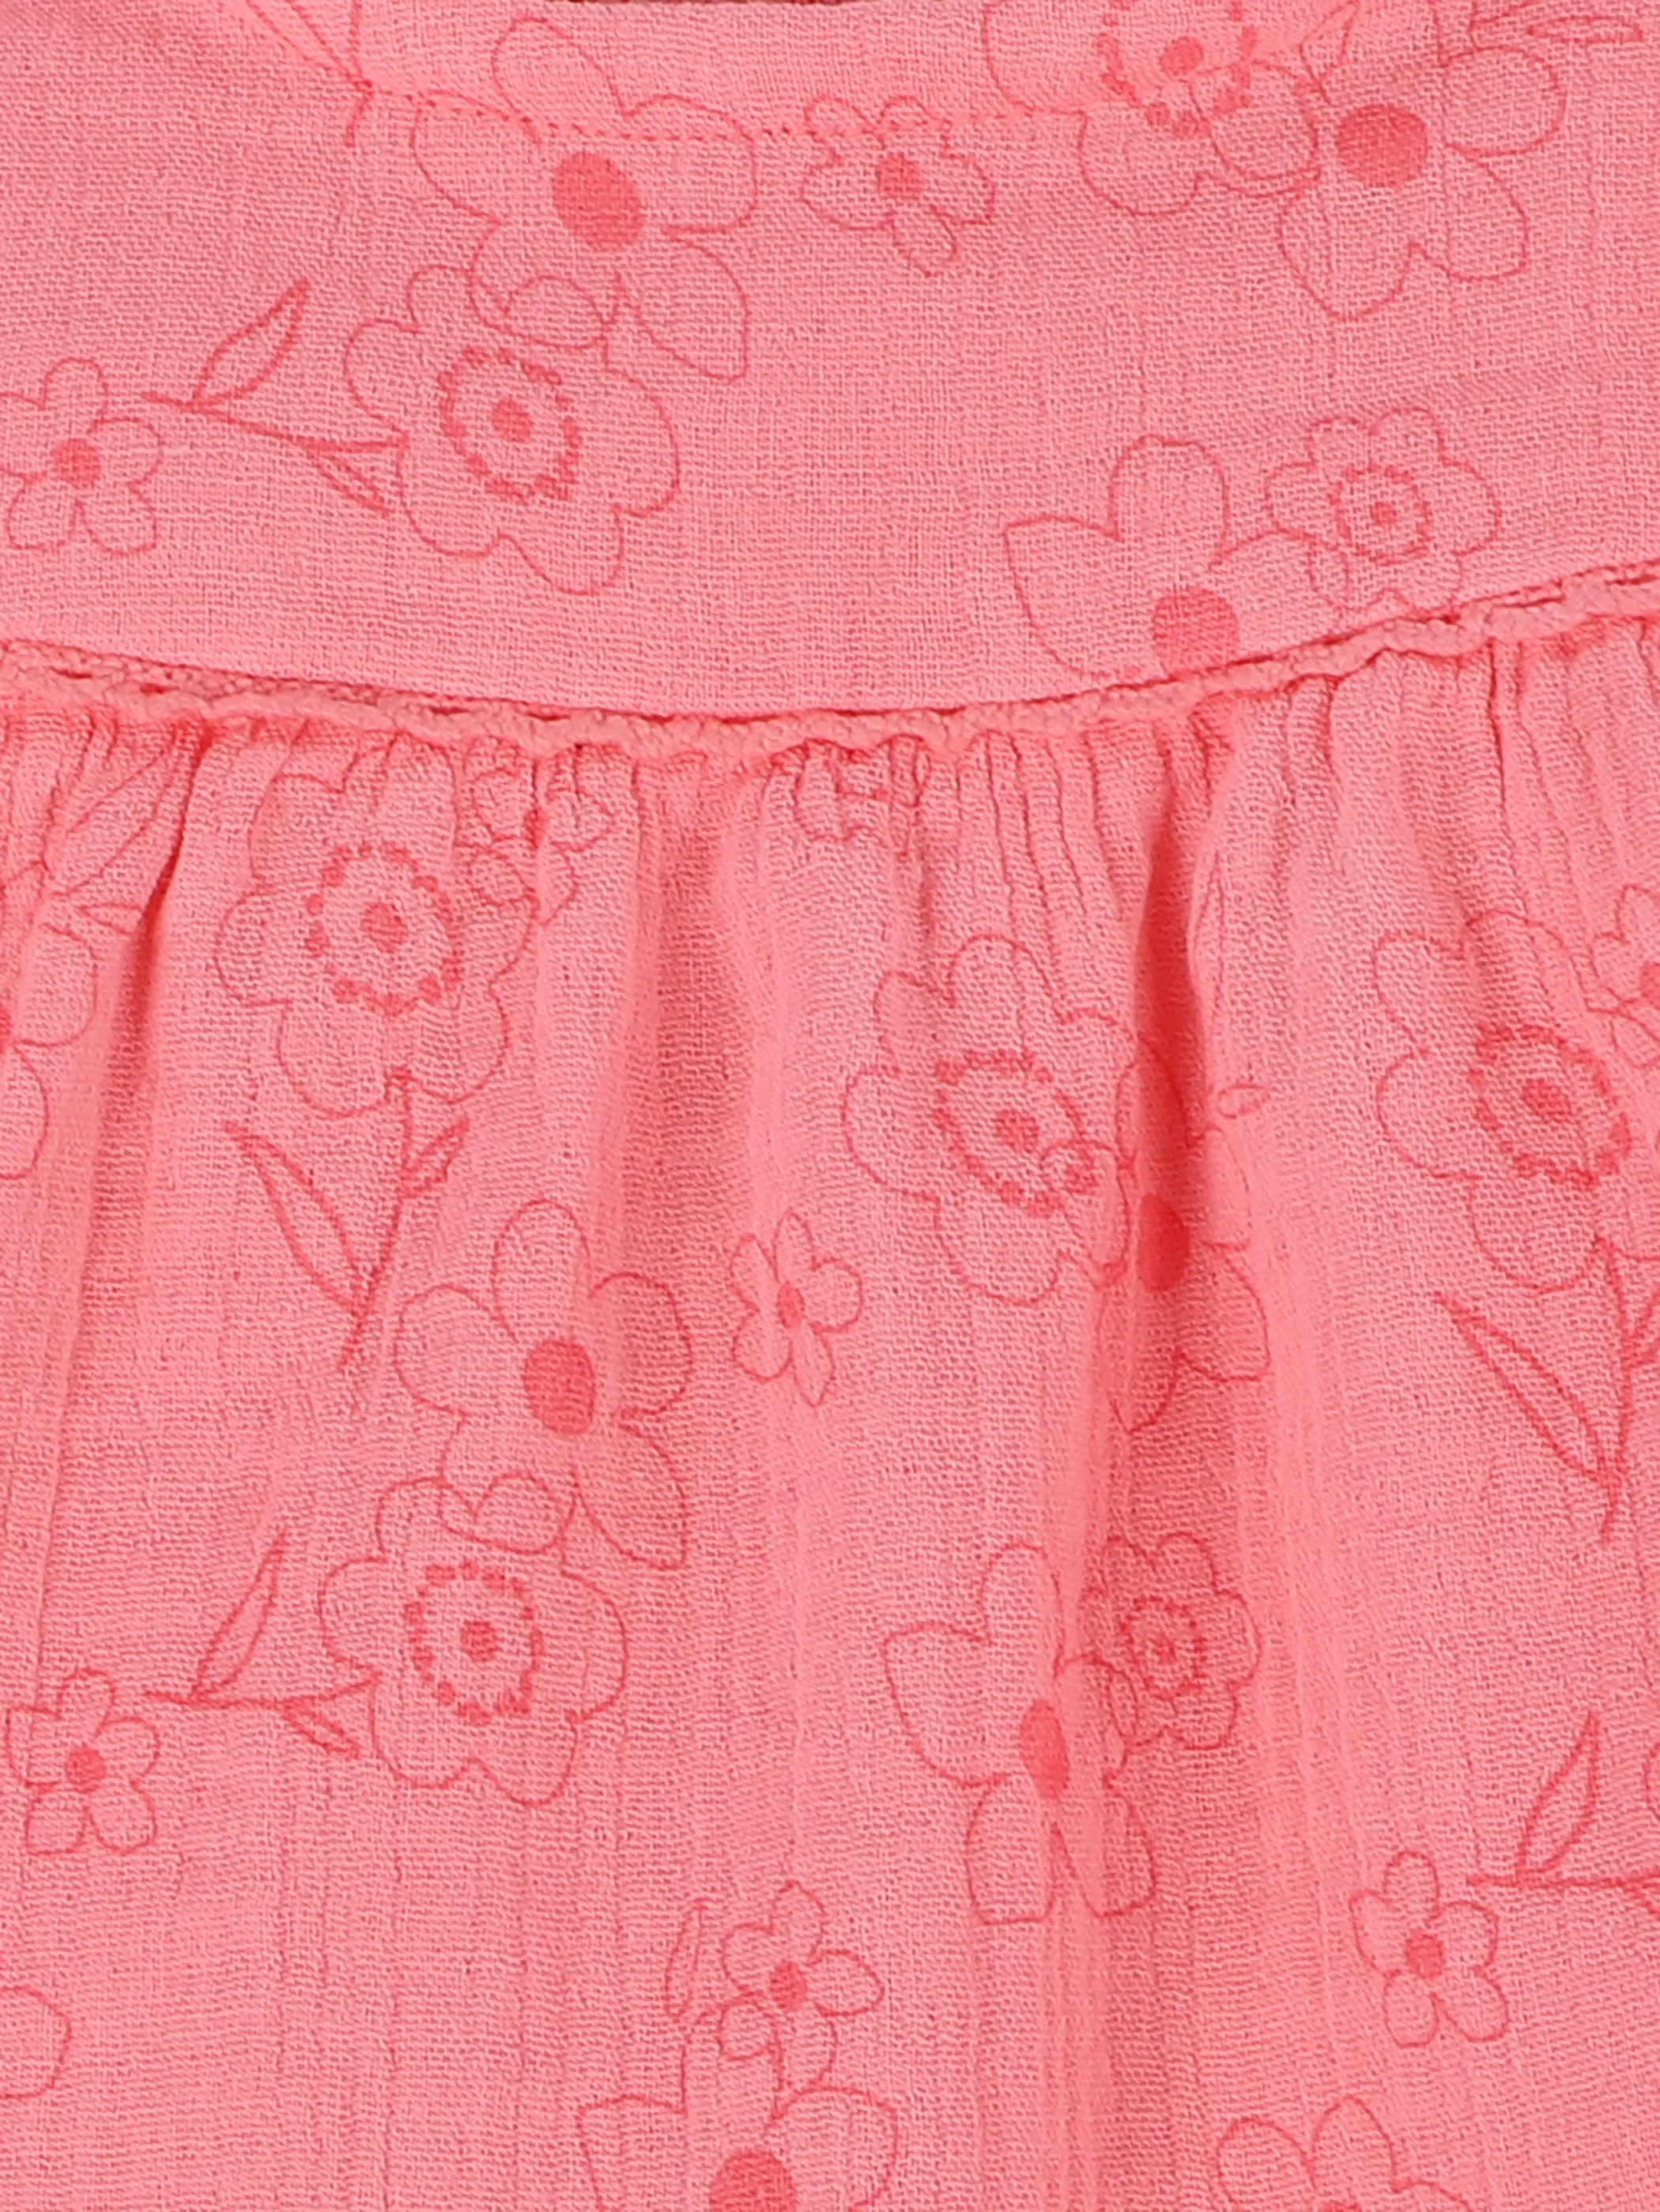 Bubble Gum BM gewebtes Kleid mit AOP in Pink Pink 892517 PINK 3